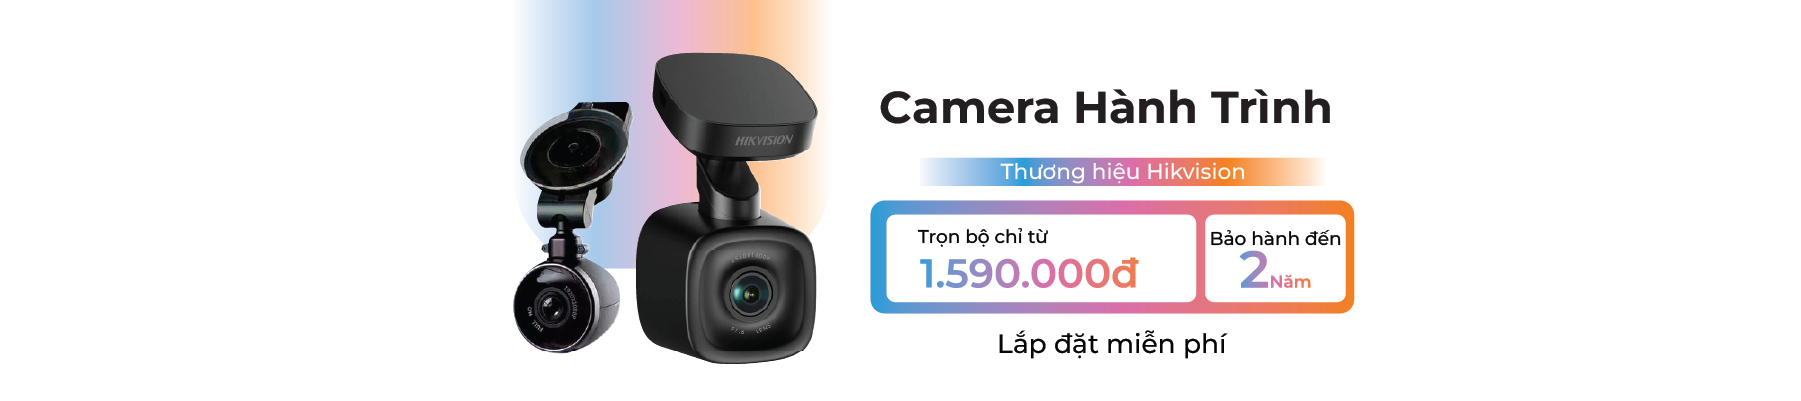 camera-hành-trinh-hikvision